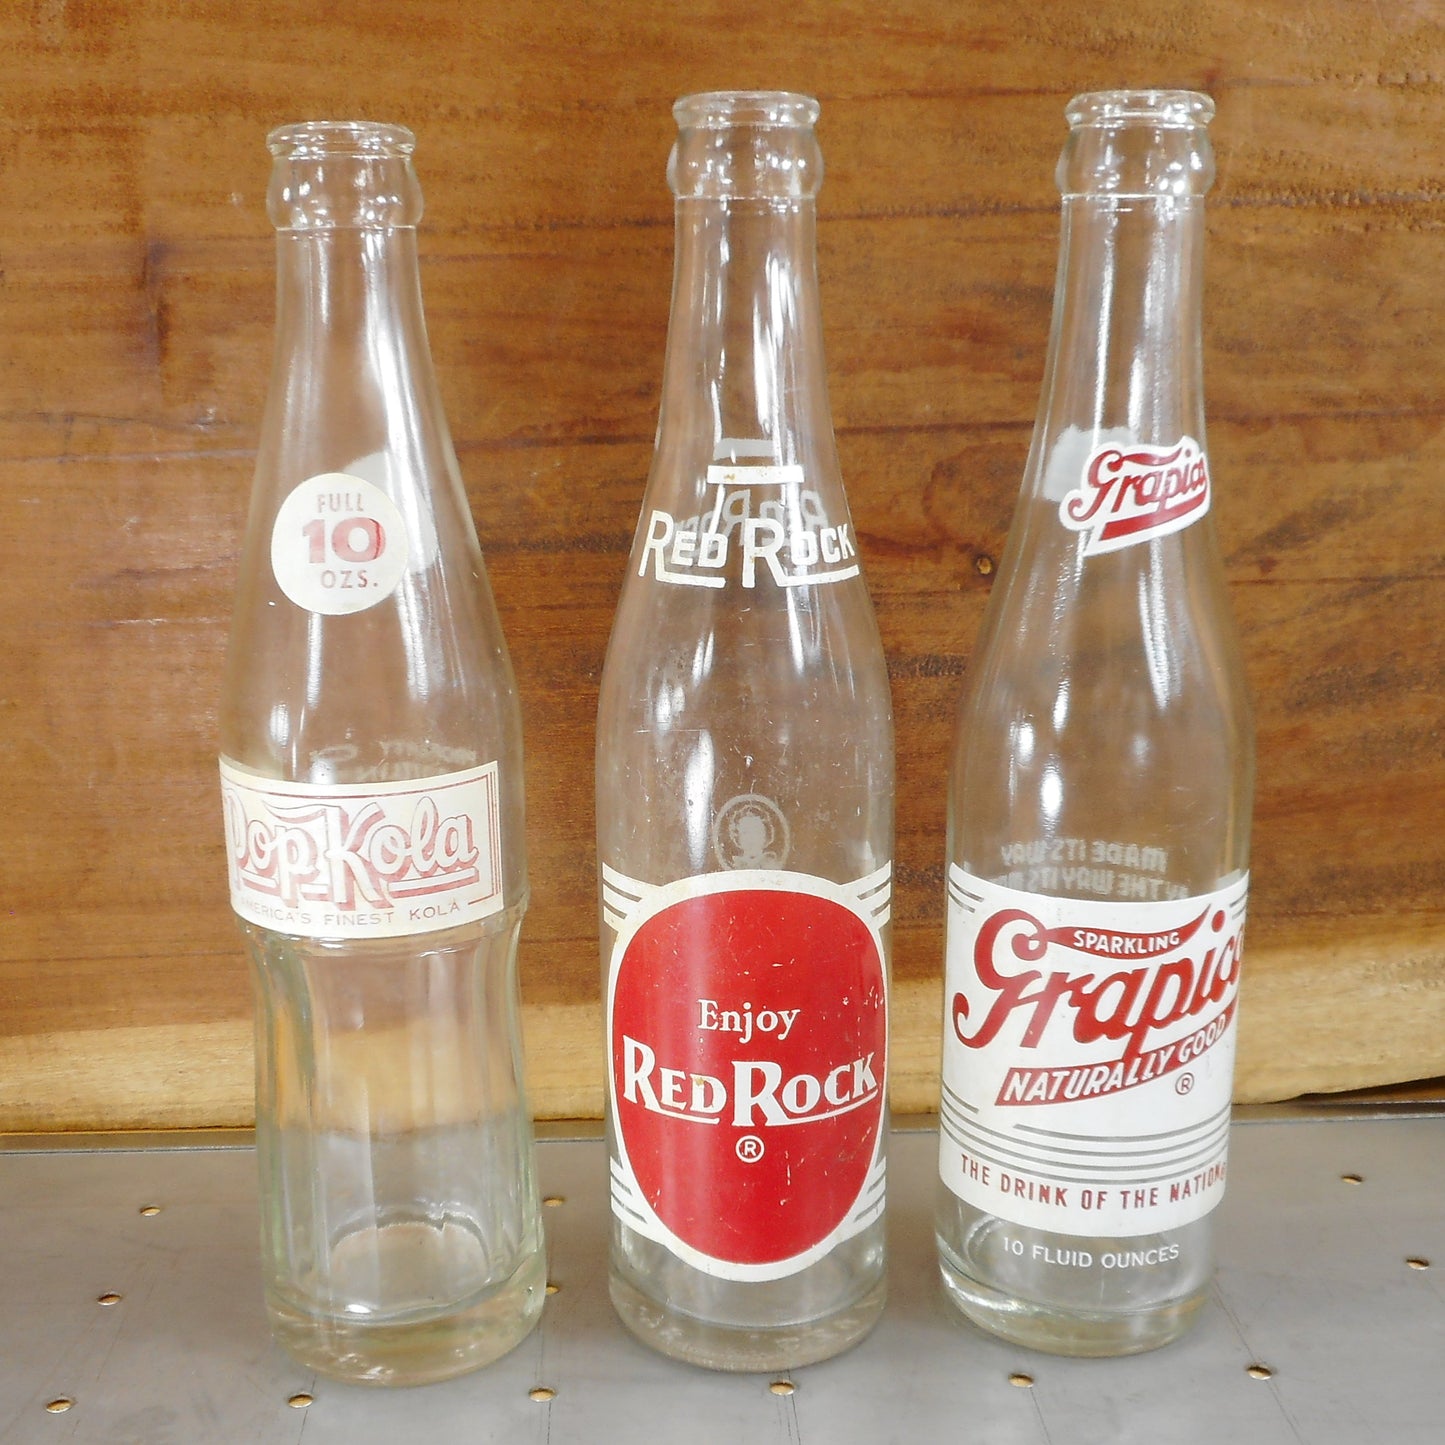 Soda Pop Bottles - Pop Kola, Red Rock, Grapico 10 oz. Vitage